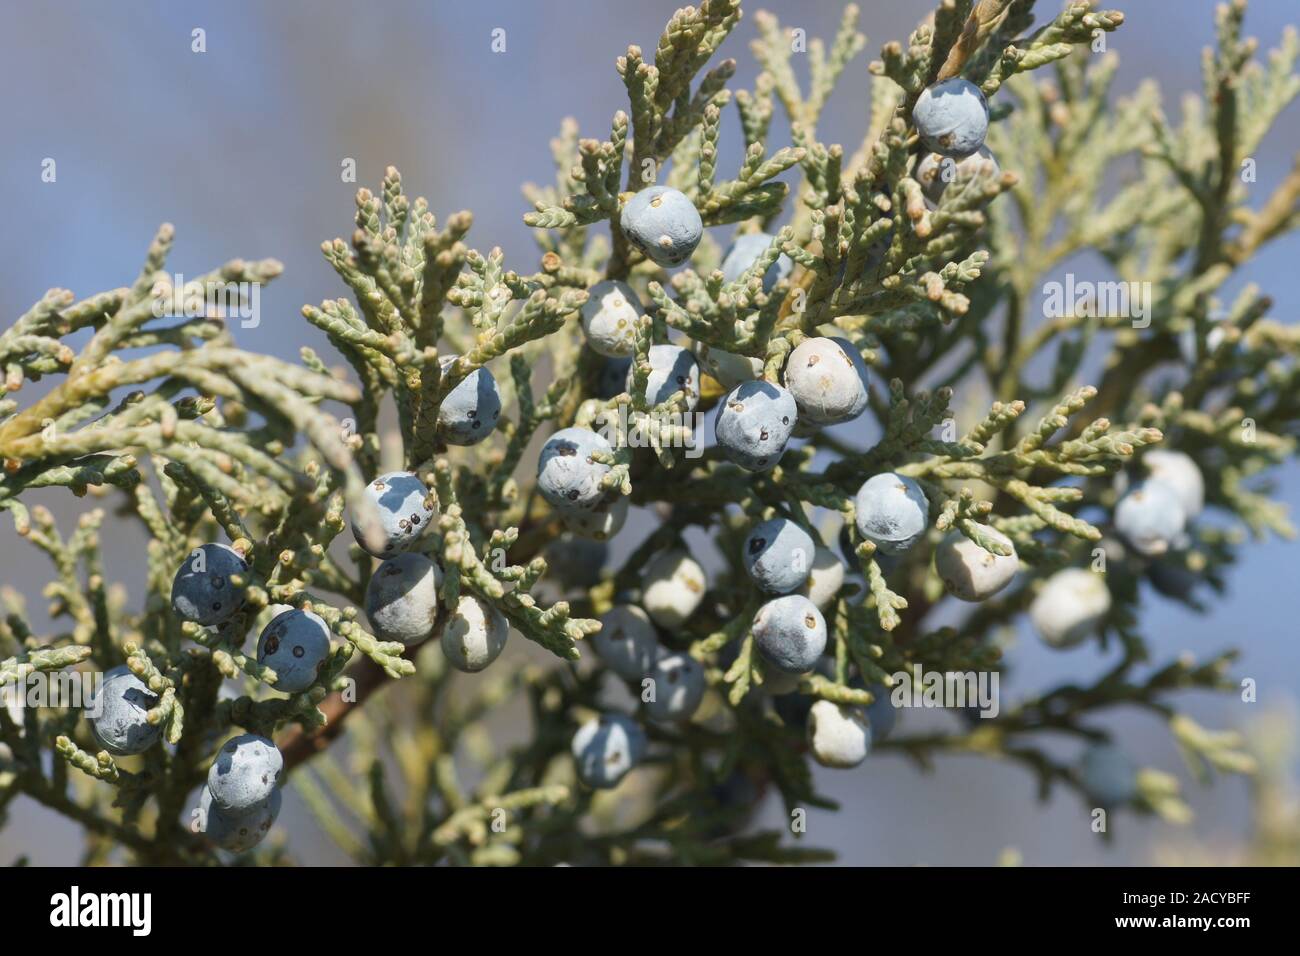 Juniperus virginiana Grey Owl, Virginian juniper, Grey owl juniper Stock Photo